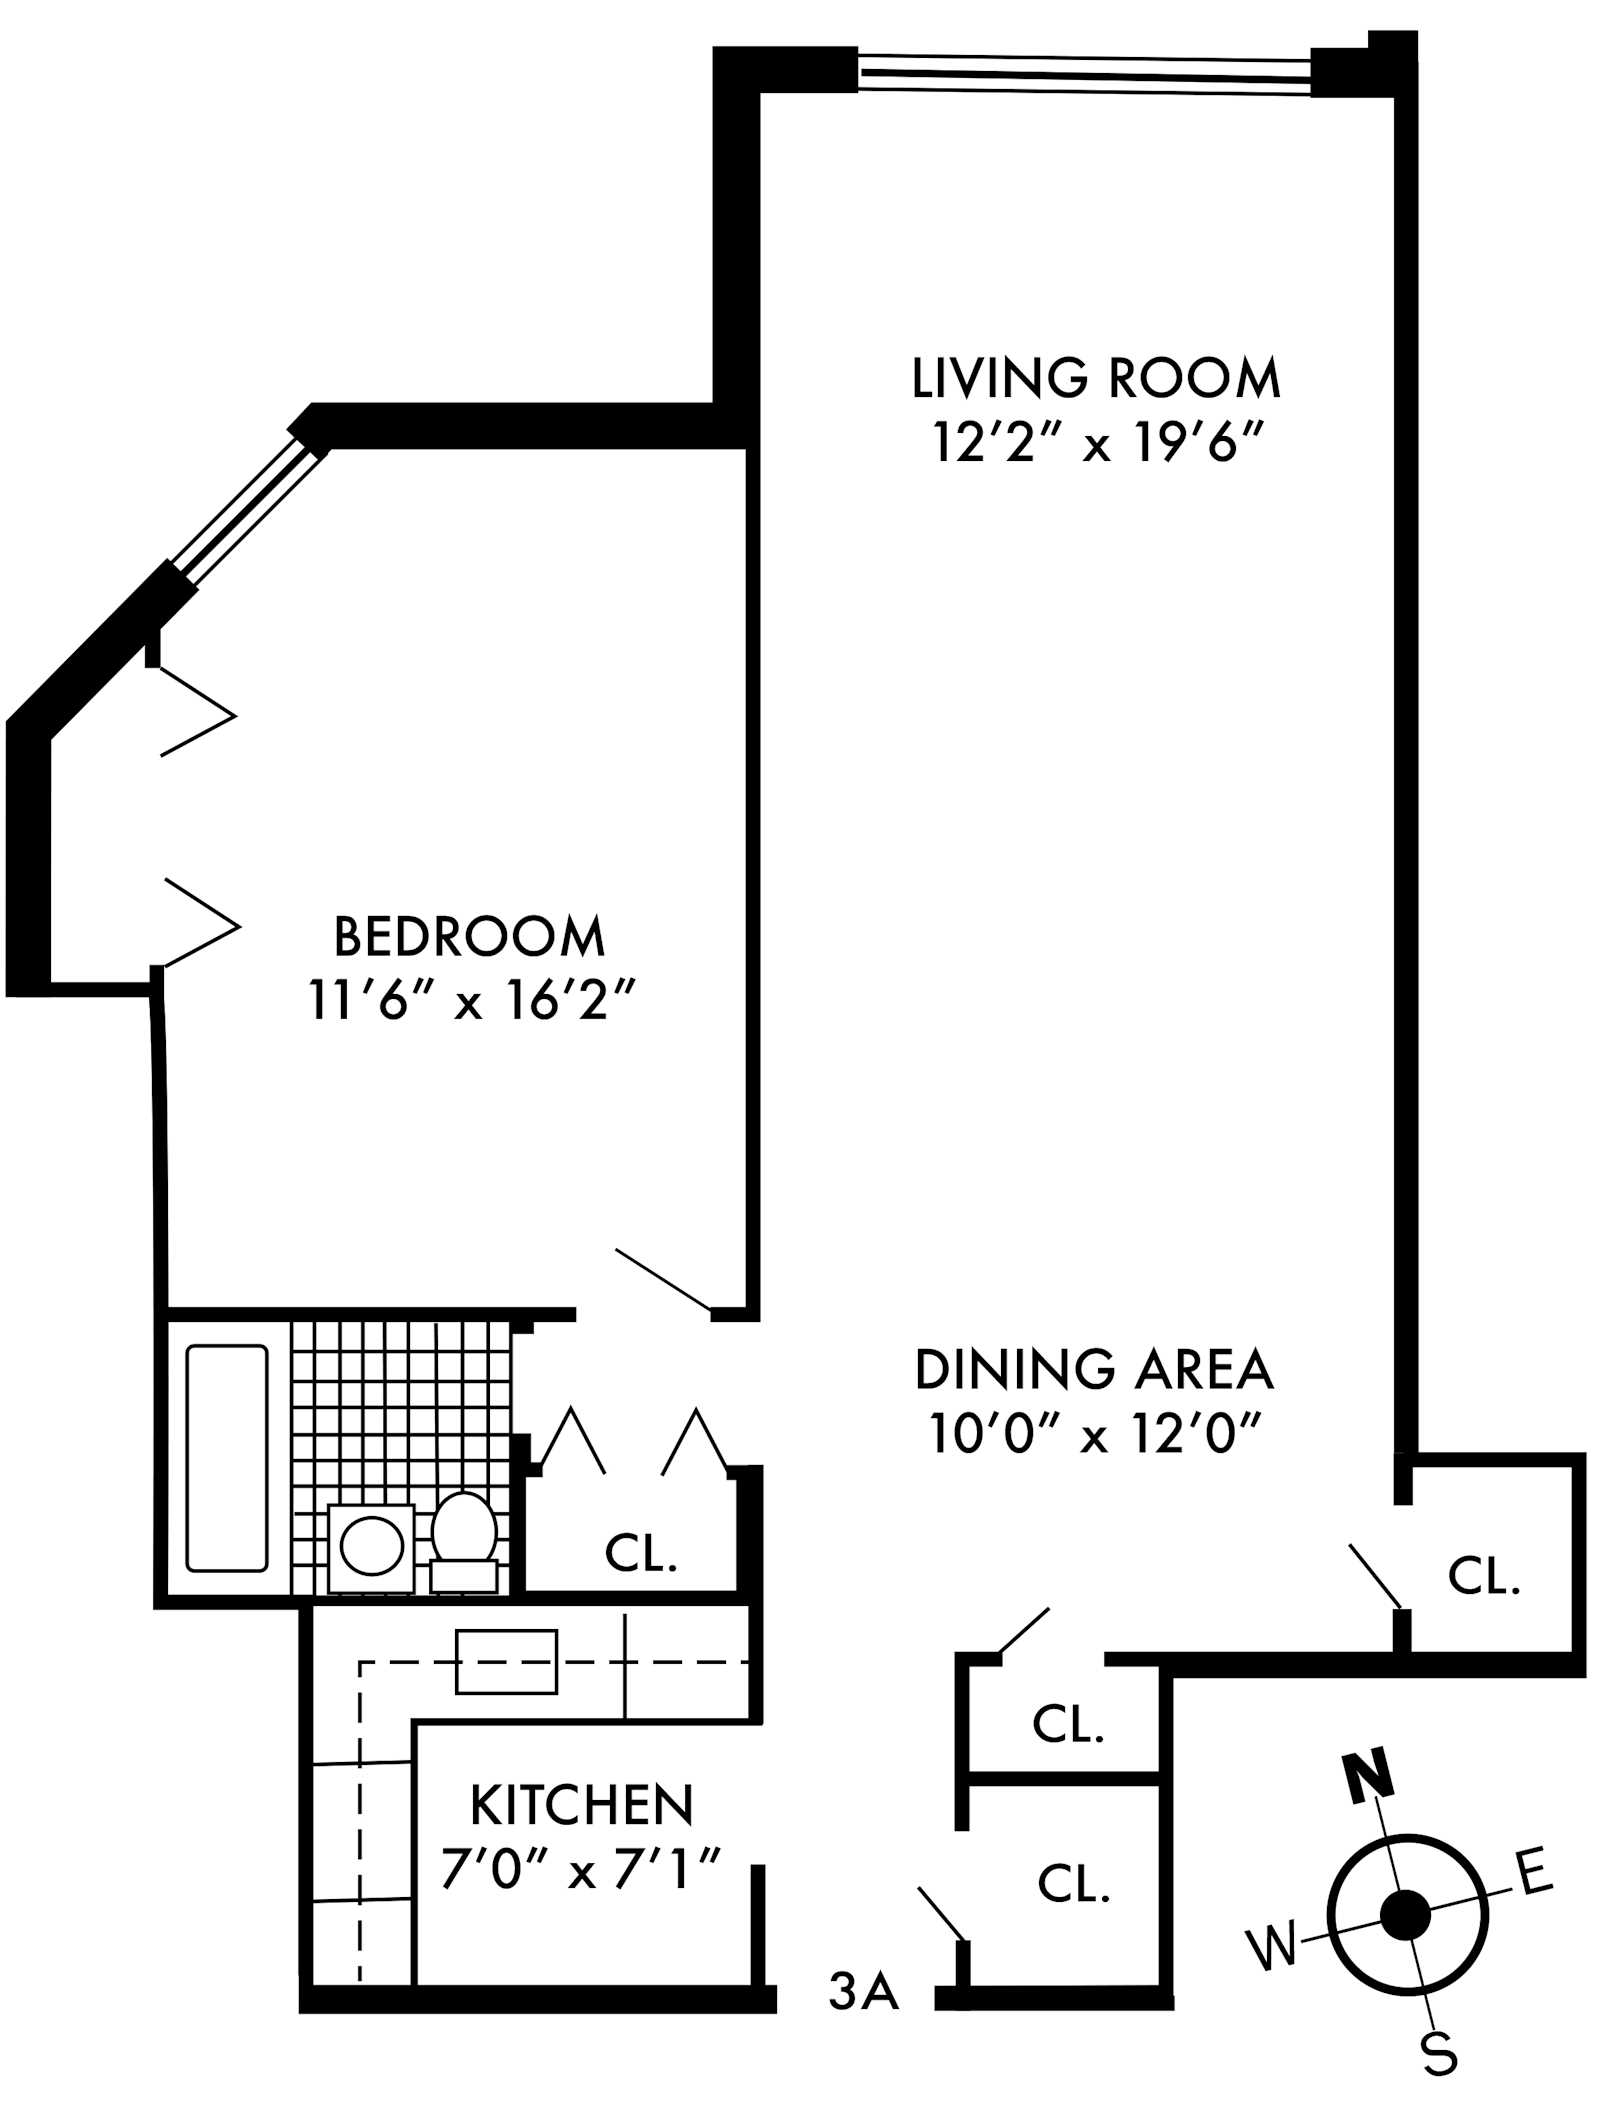 Floorplan for 91 Van Cortlandt Avenue, 3A